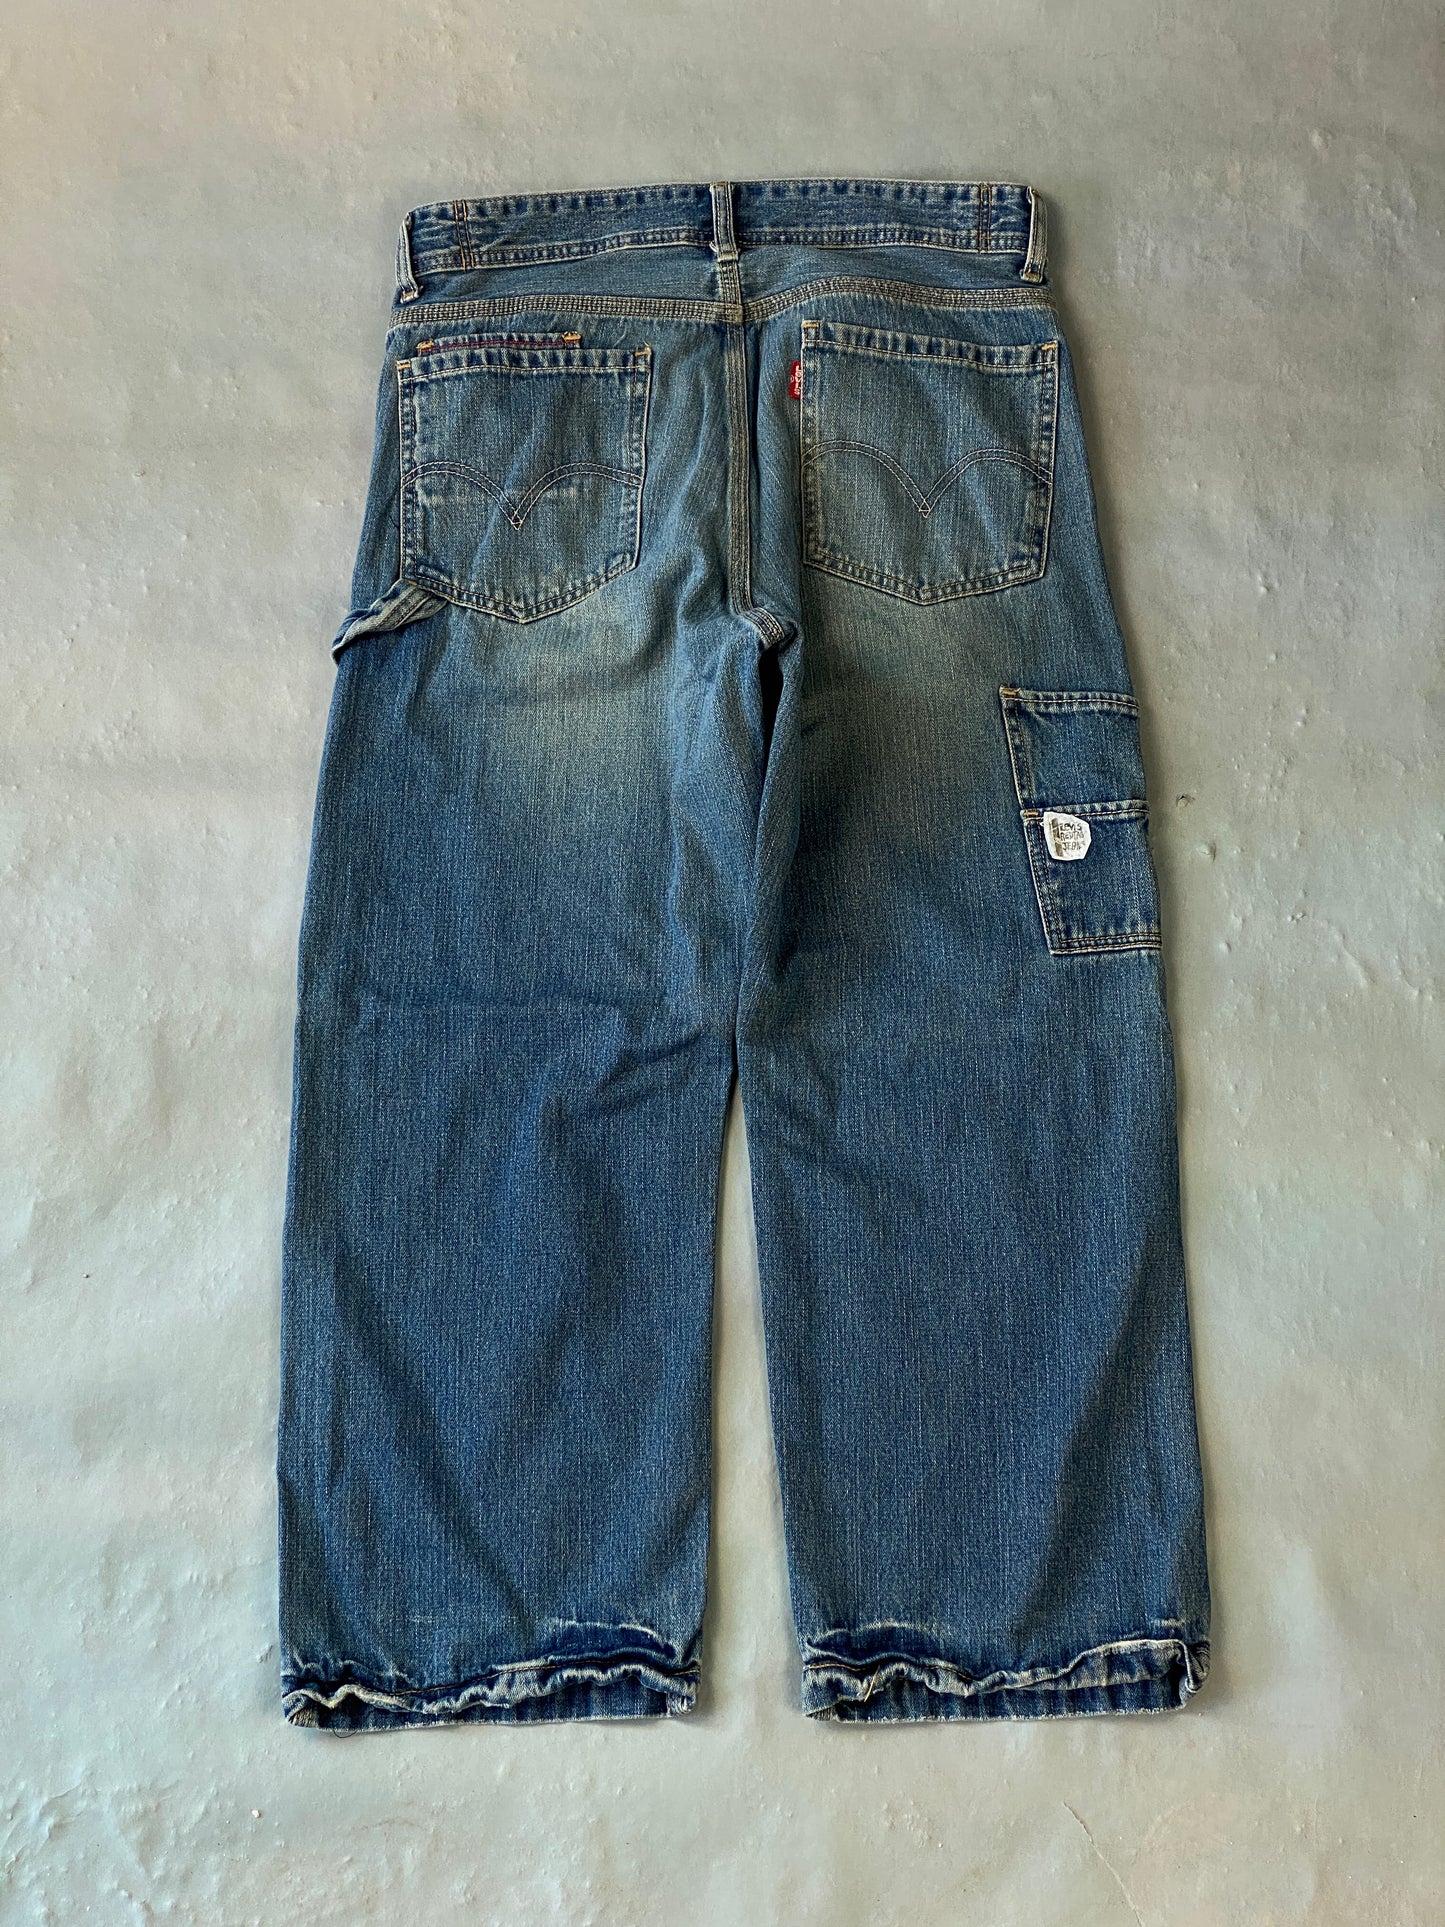 Levis Redtab Carpenter Jeans - 32